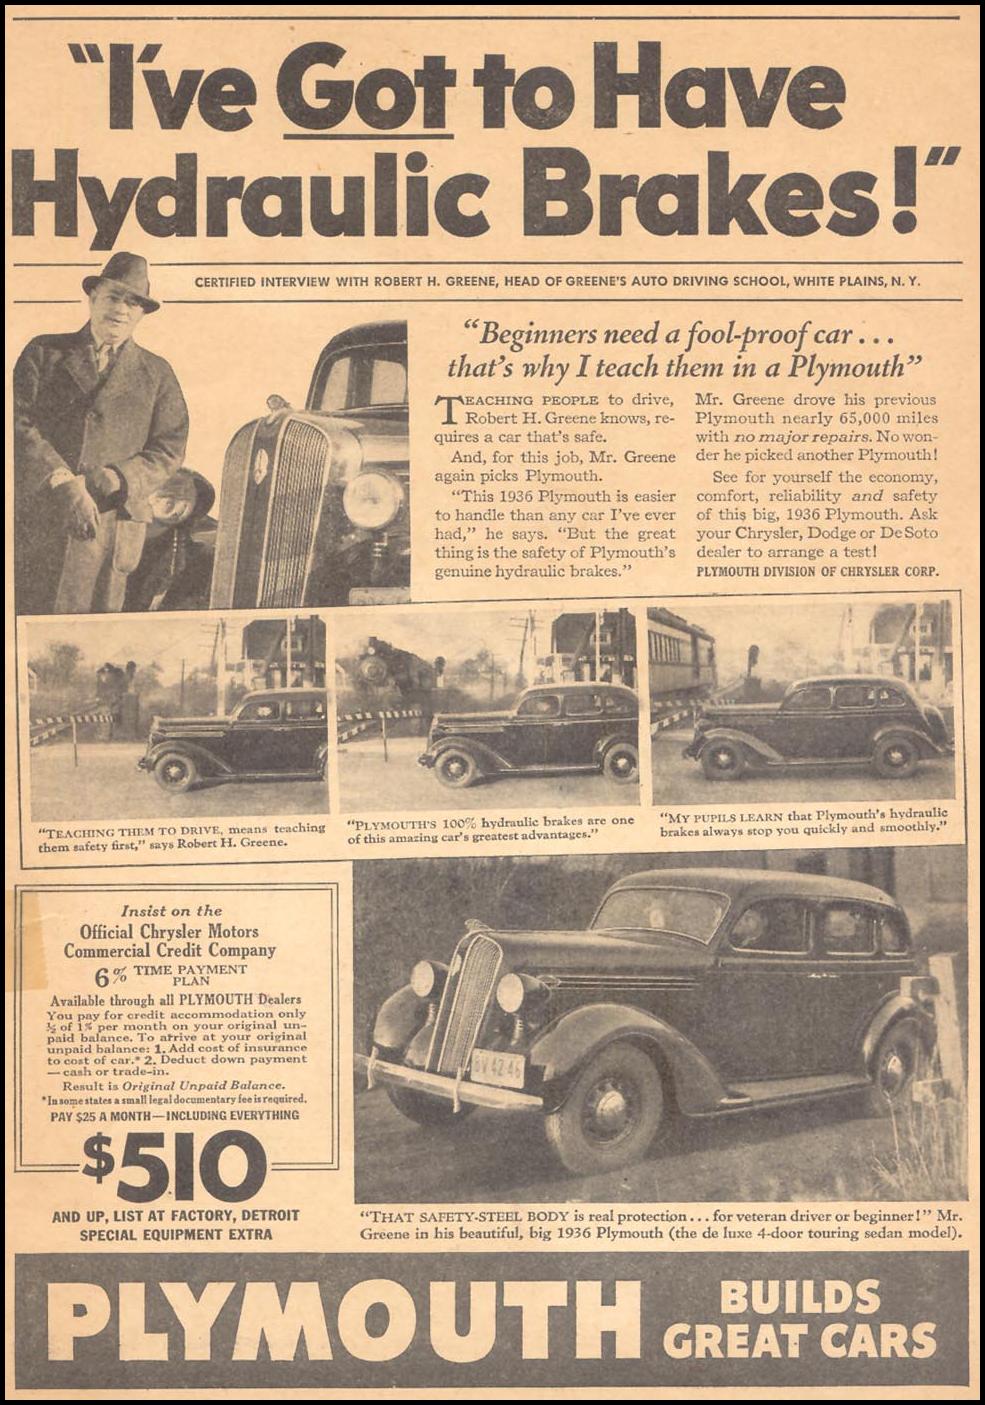 PLYMOUTH AUTOMOBILES
LIBERTY
02/15/1936
p. 1